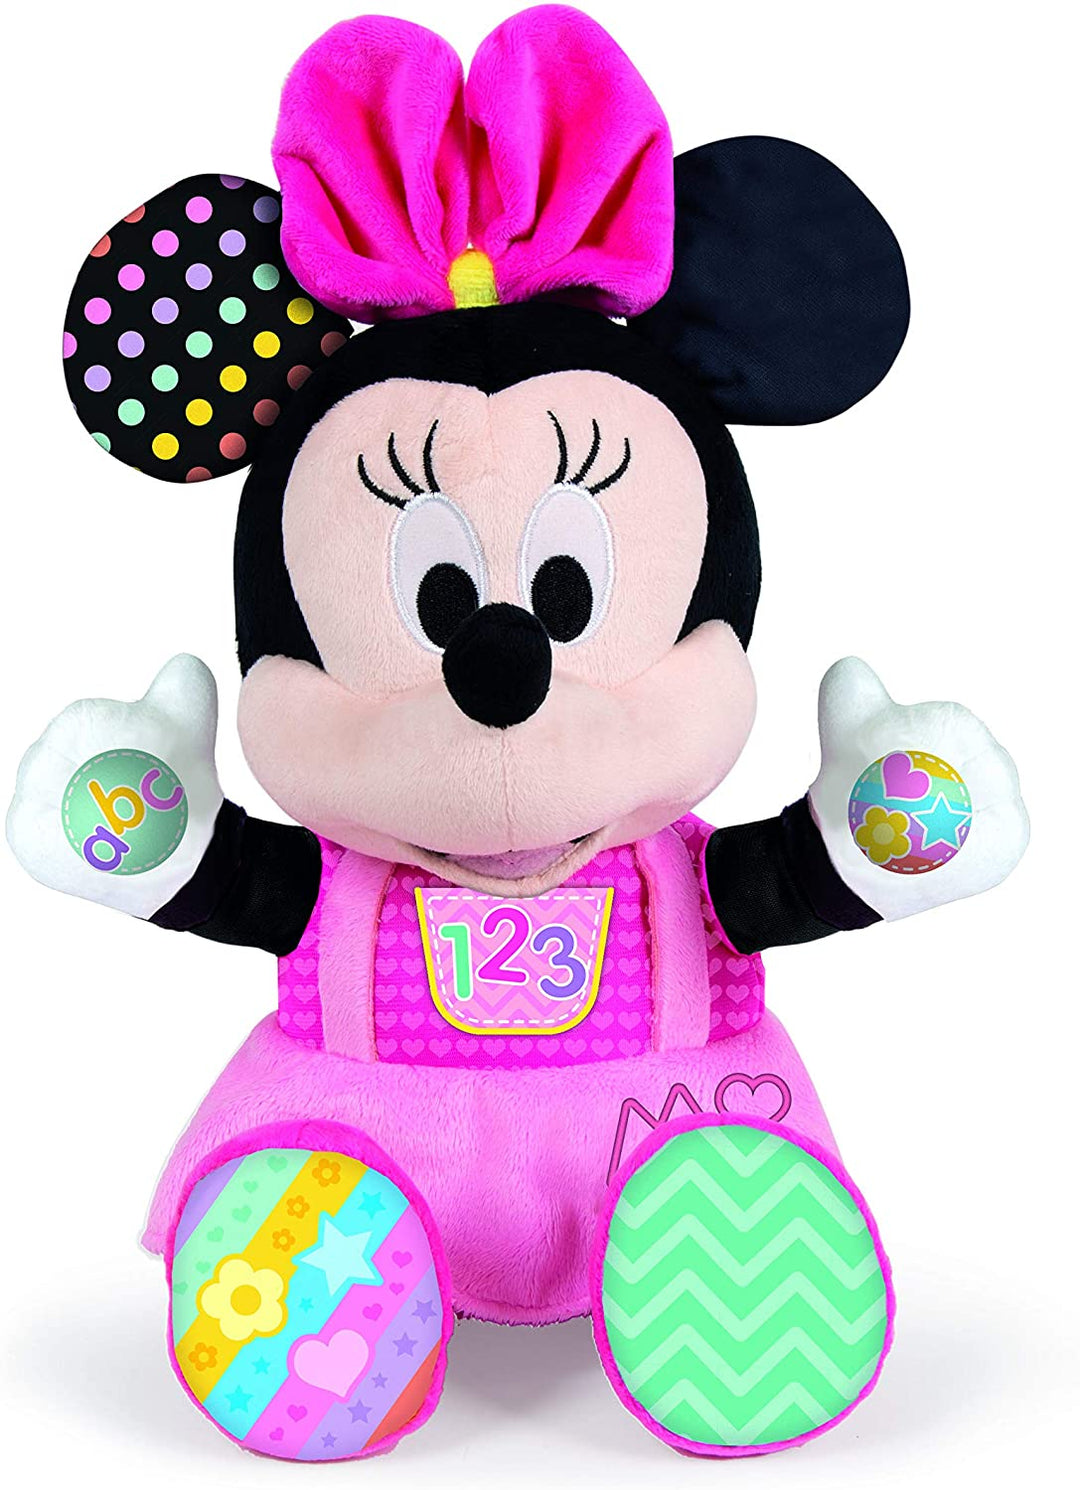 Baby Disney – Baby Minnie Plush (Clementoni 55325)